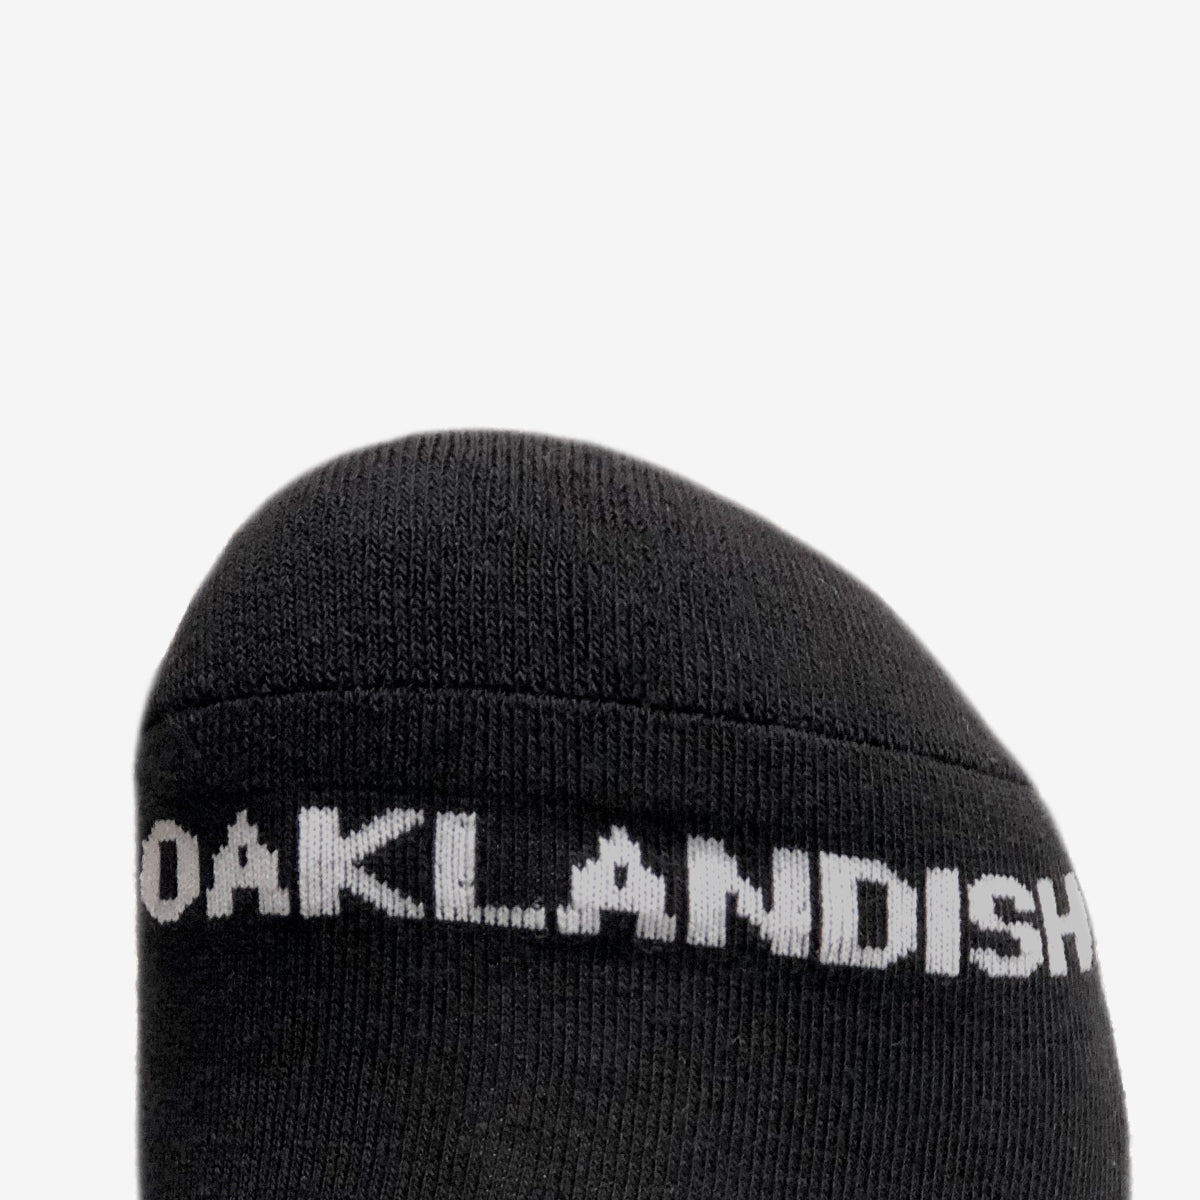 Close up of Oaklandish wordmark on the toe of black crew socks.